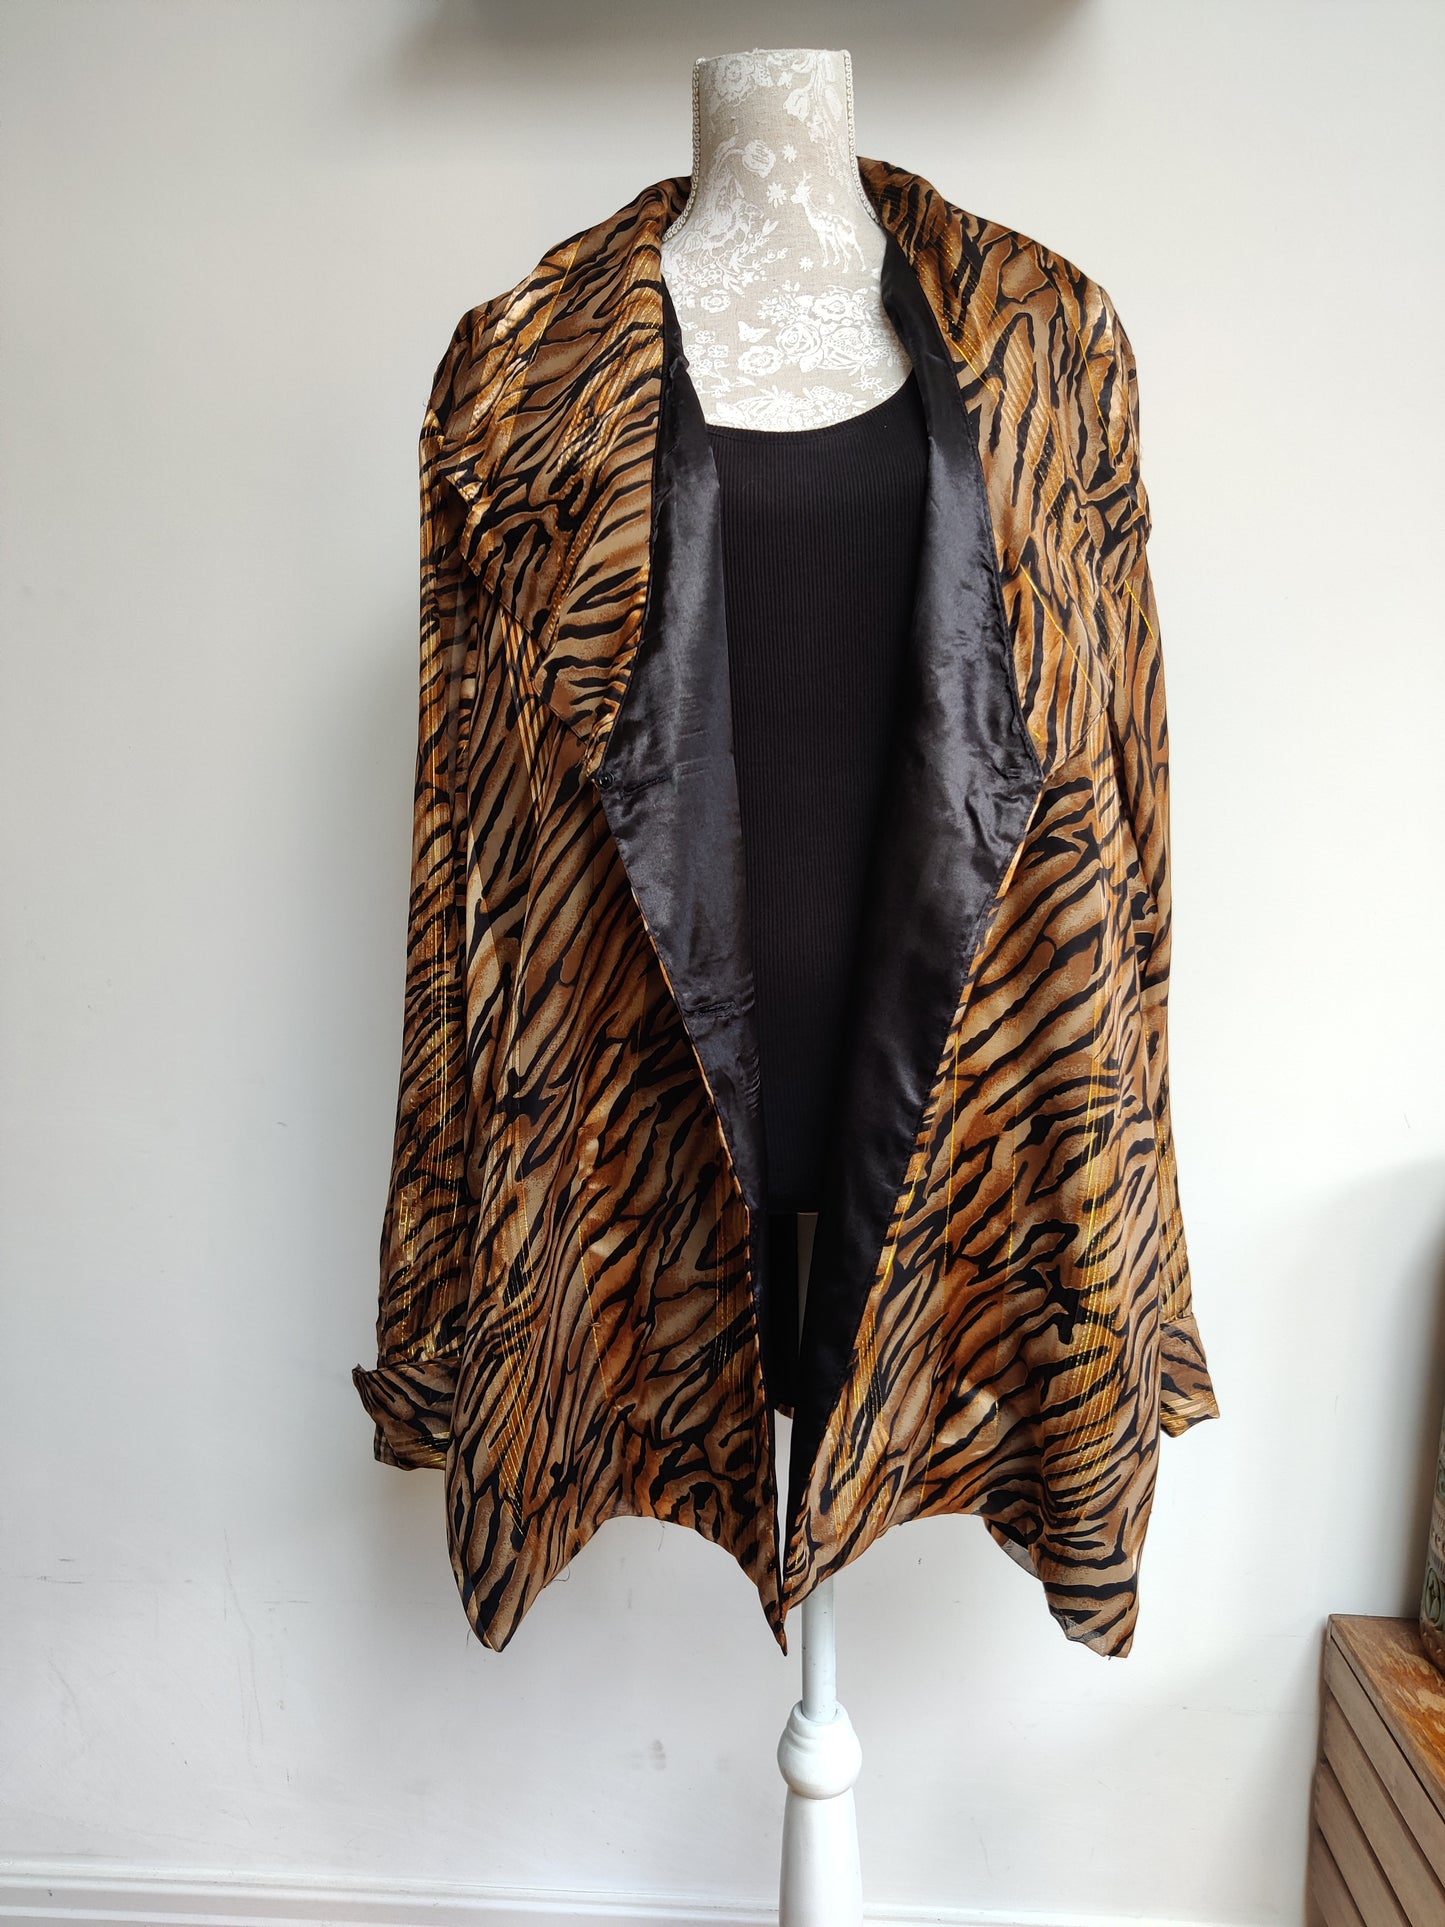 Tiger print lightweight jacket. Size 28